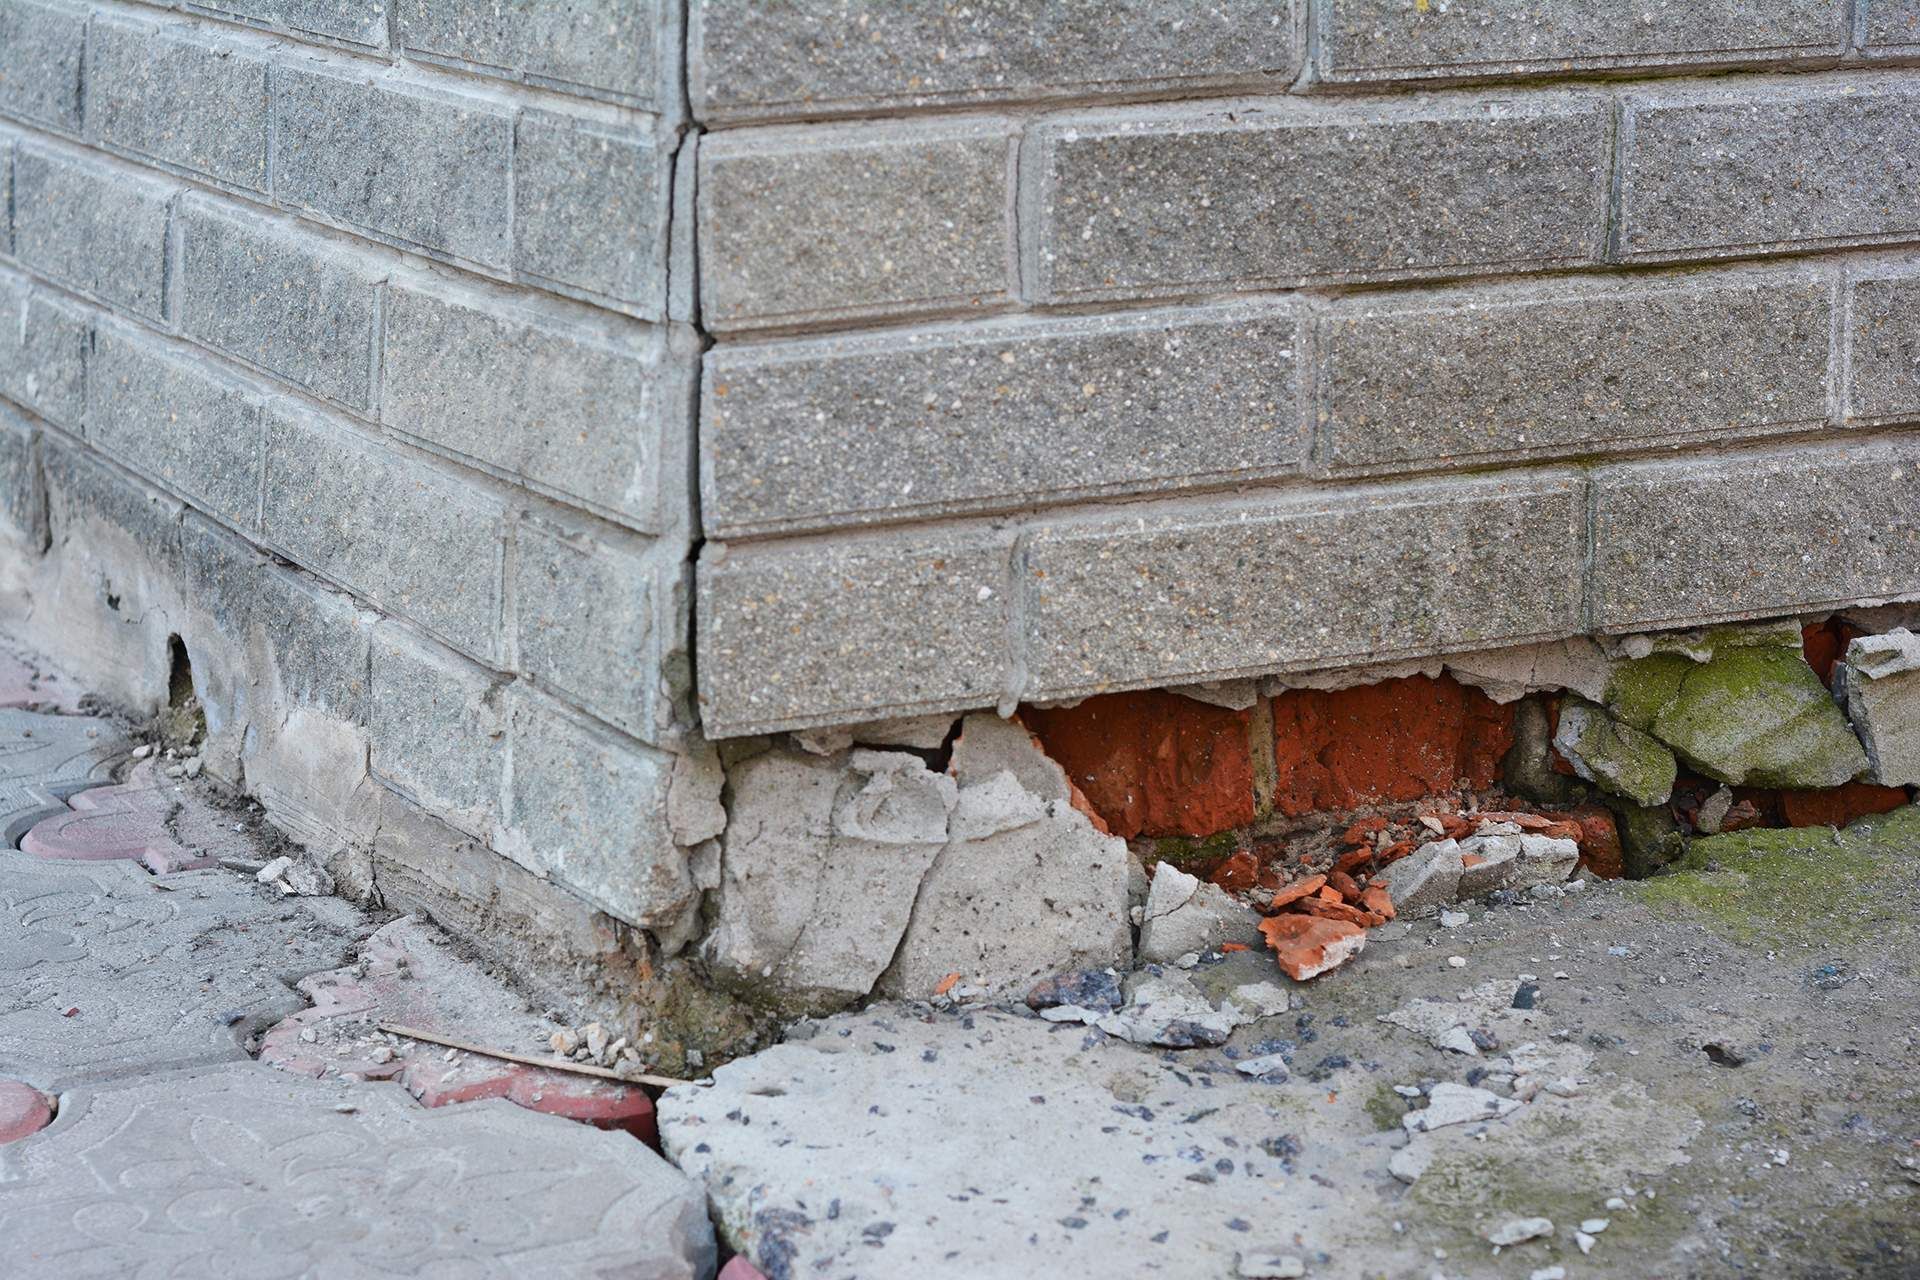 Foundation Repair - Warning Signs. House foundation repair